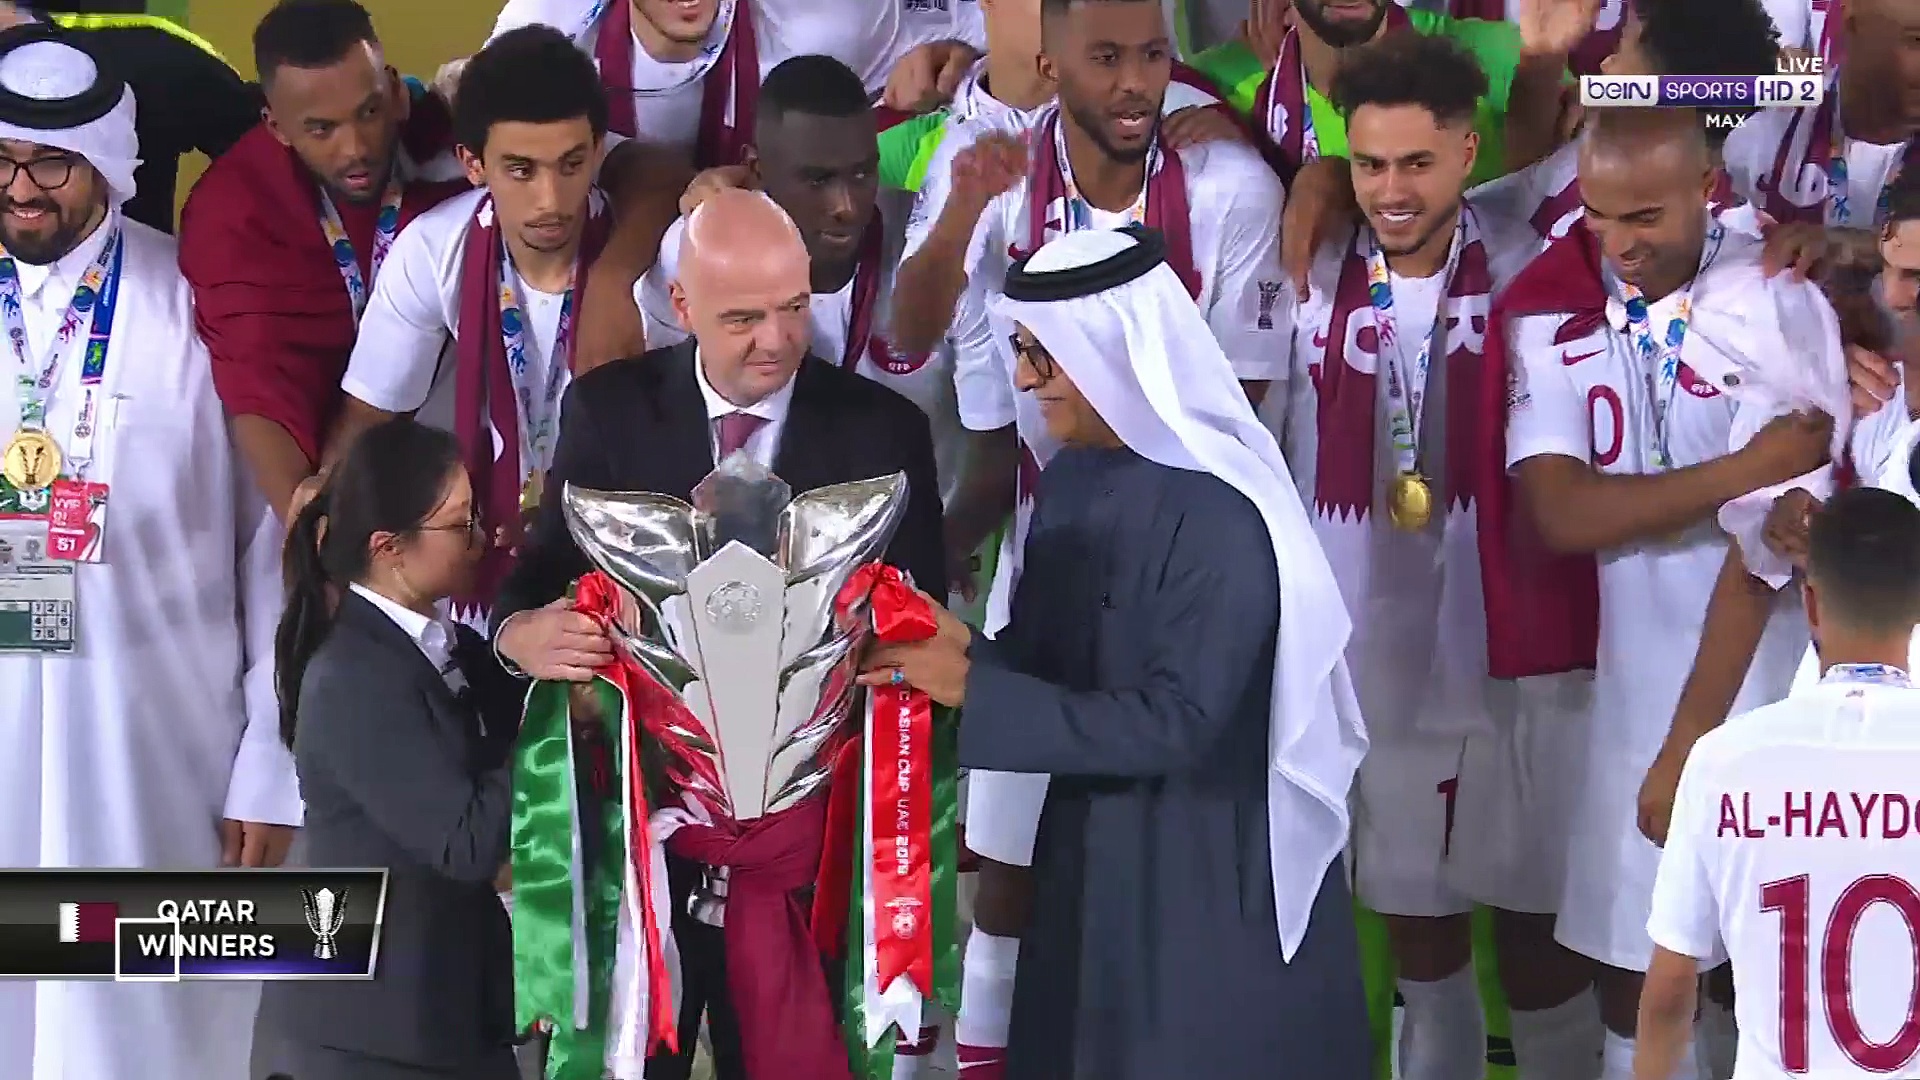 Qatar celebration